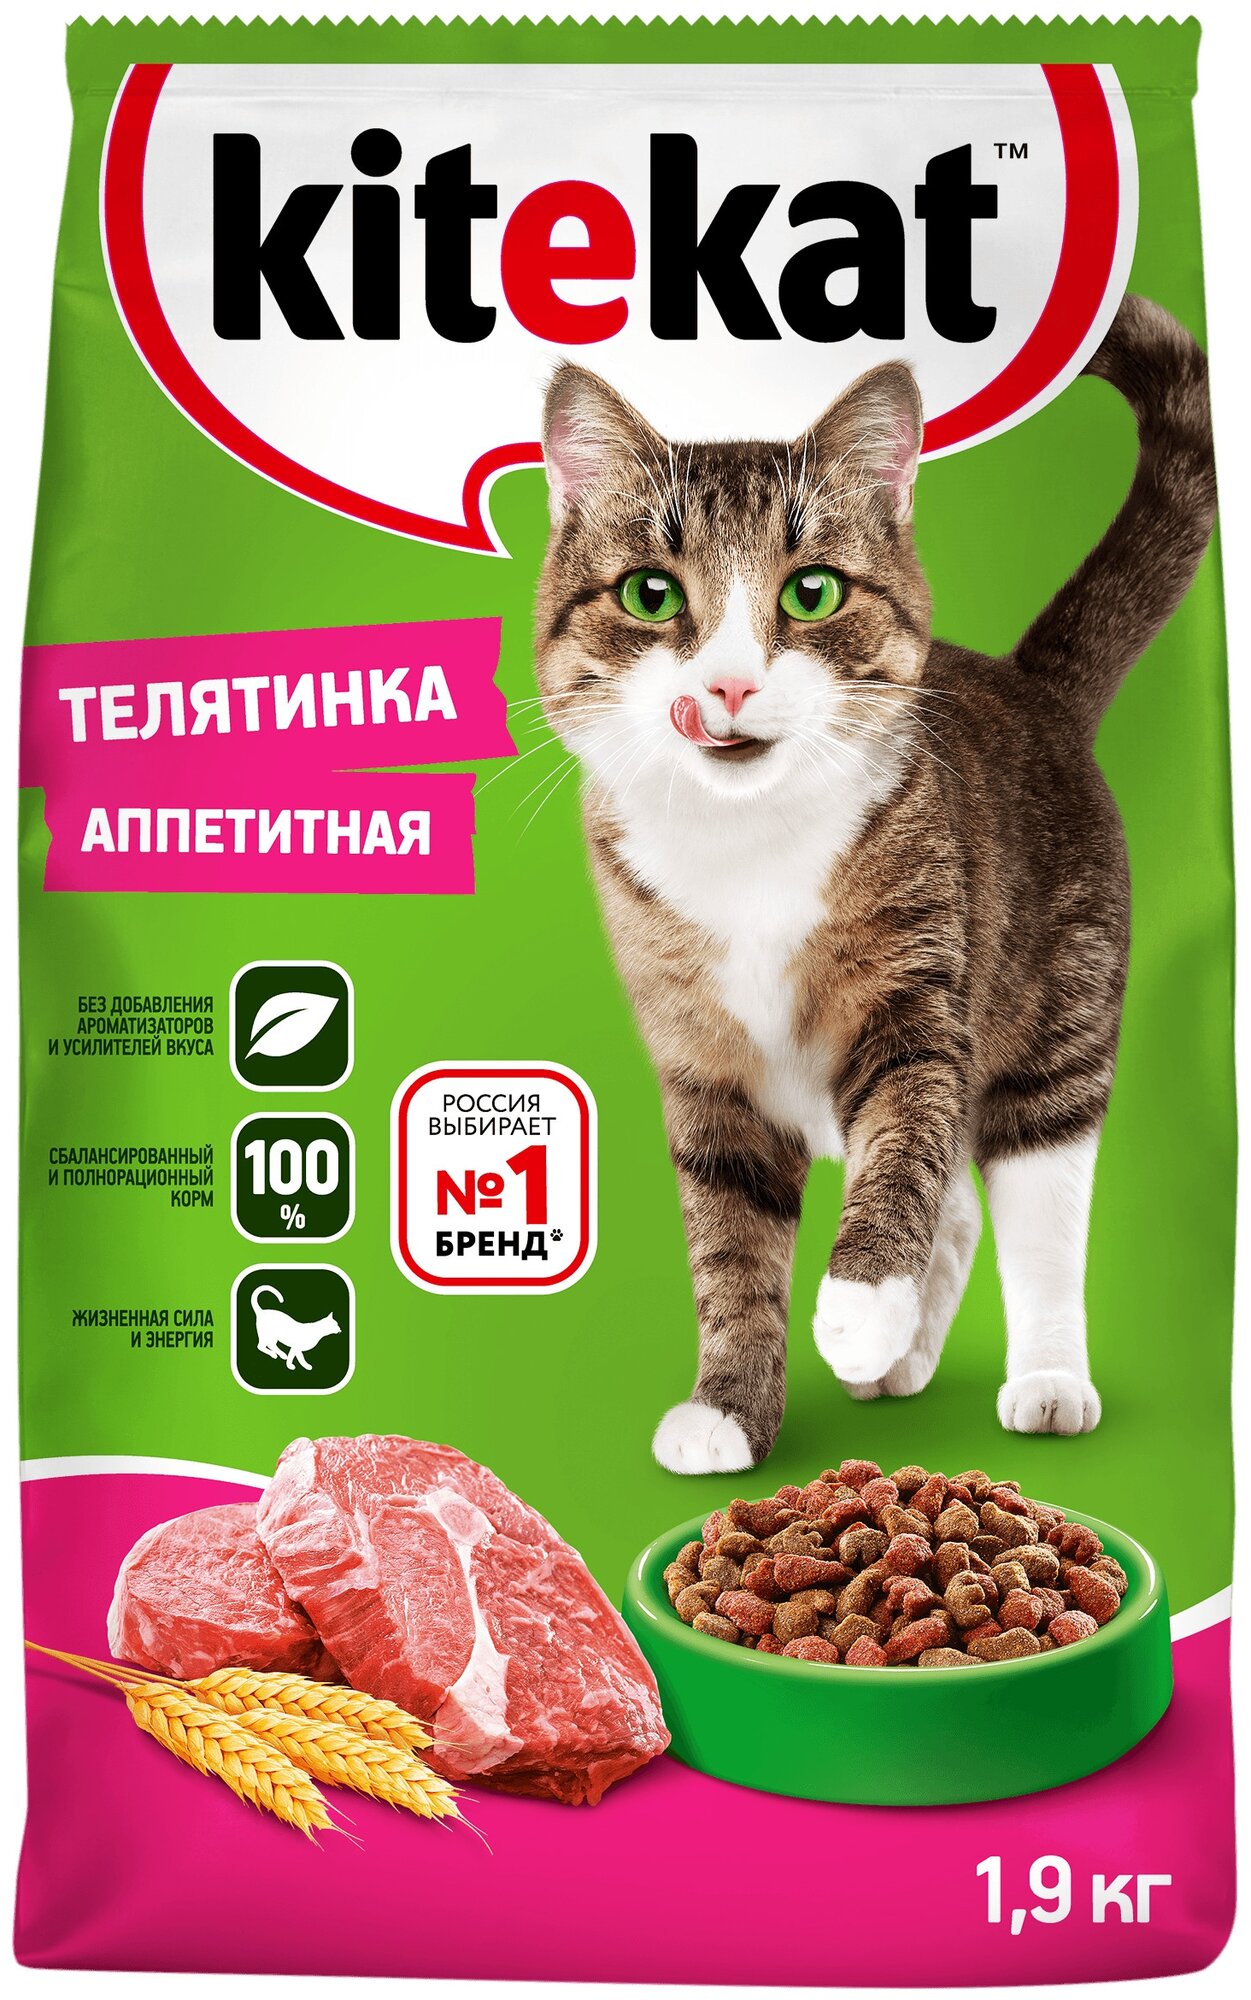 Сухой корм для кошек Kitekat телятинка аппетитная, 1.9кг - фотография № 2